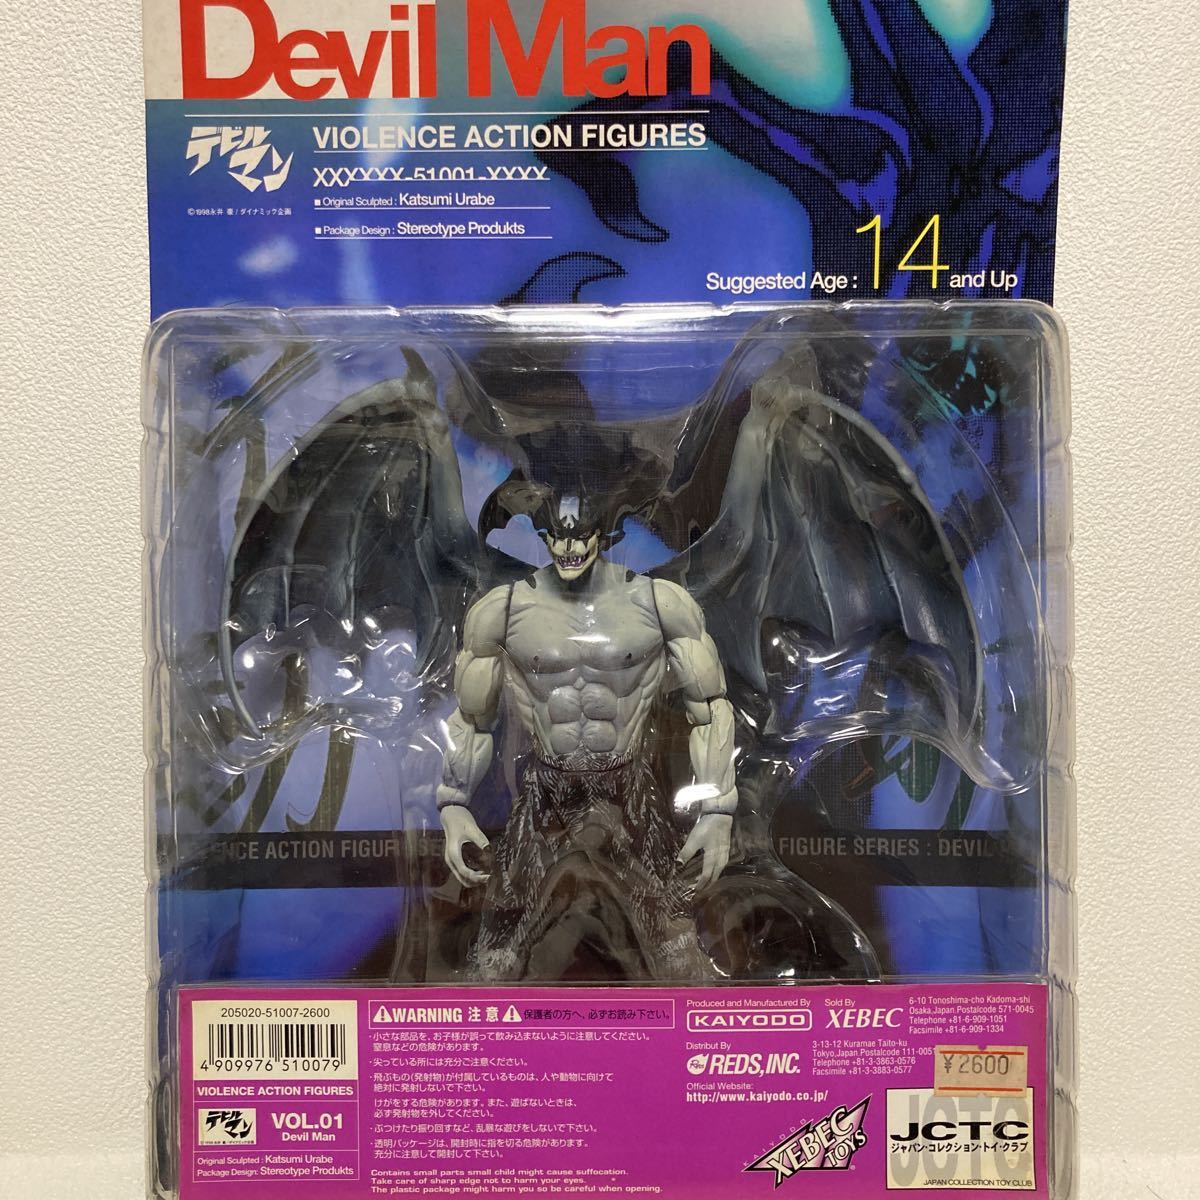 *# Devilman violence action фигурка Kaiyodo Japan коллекция to икра b передвижной фигурка 